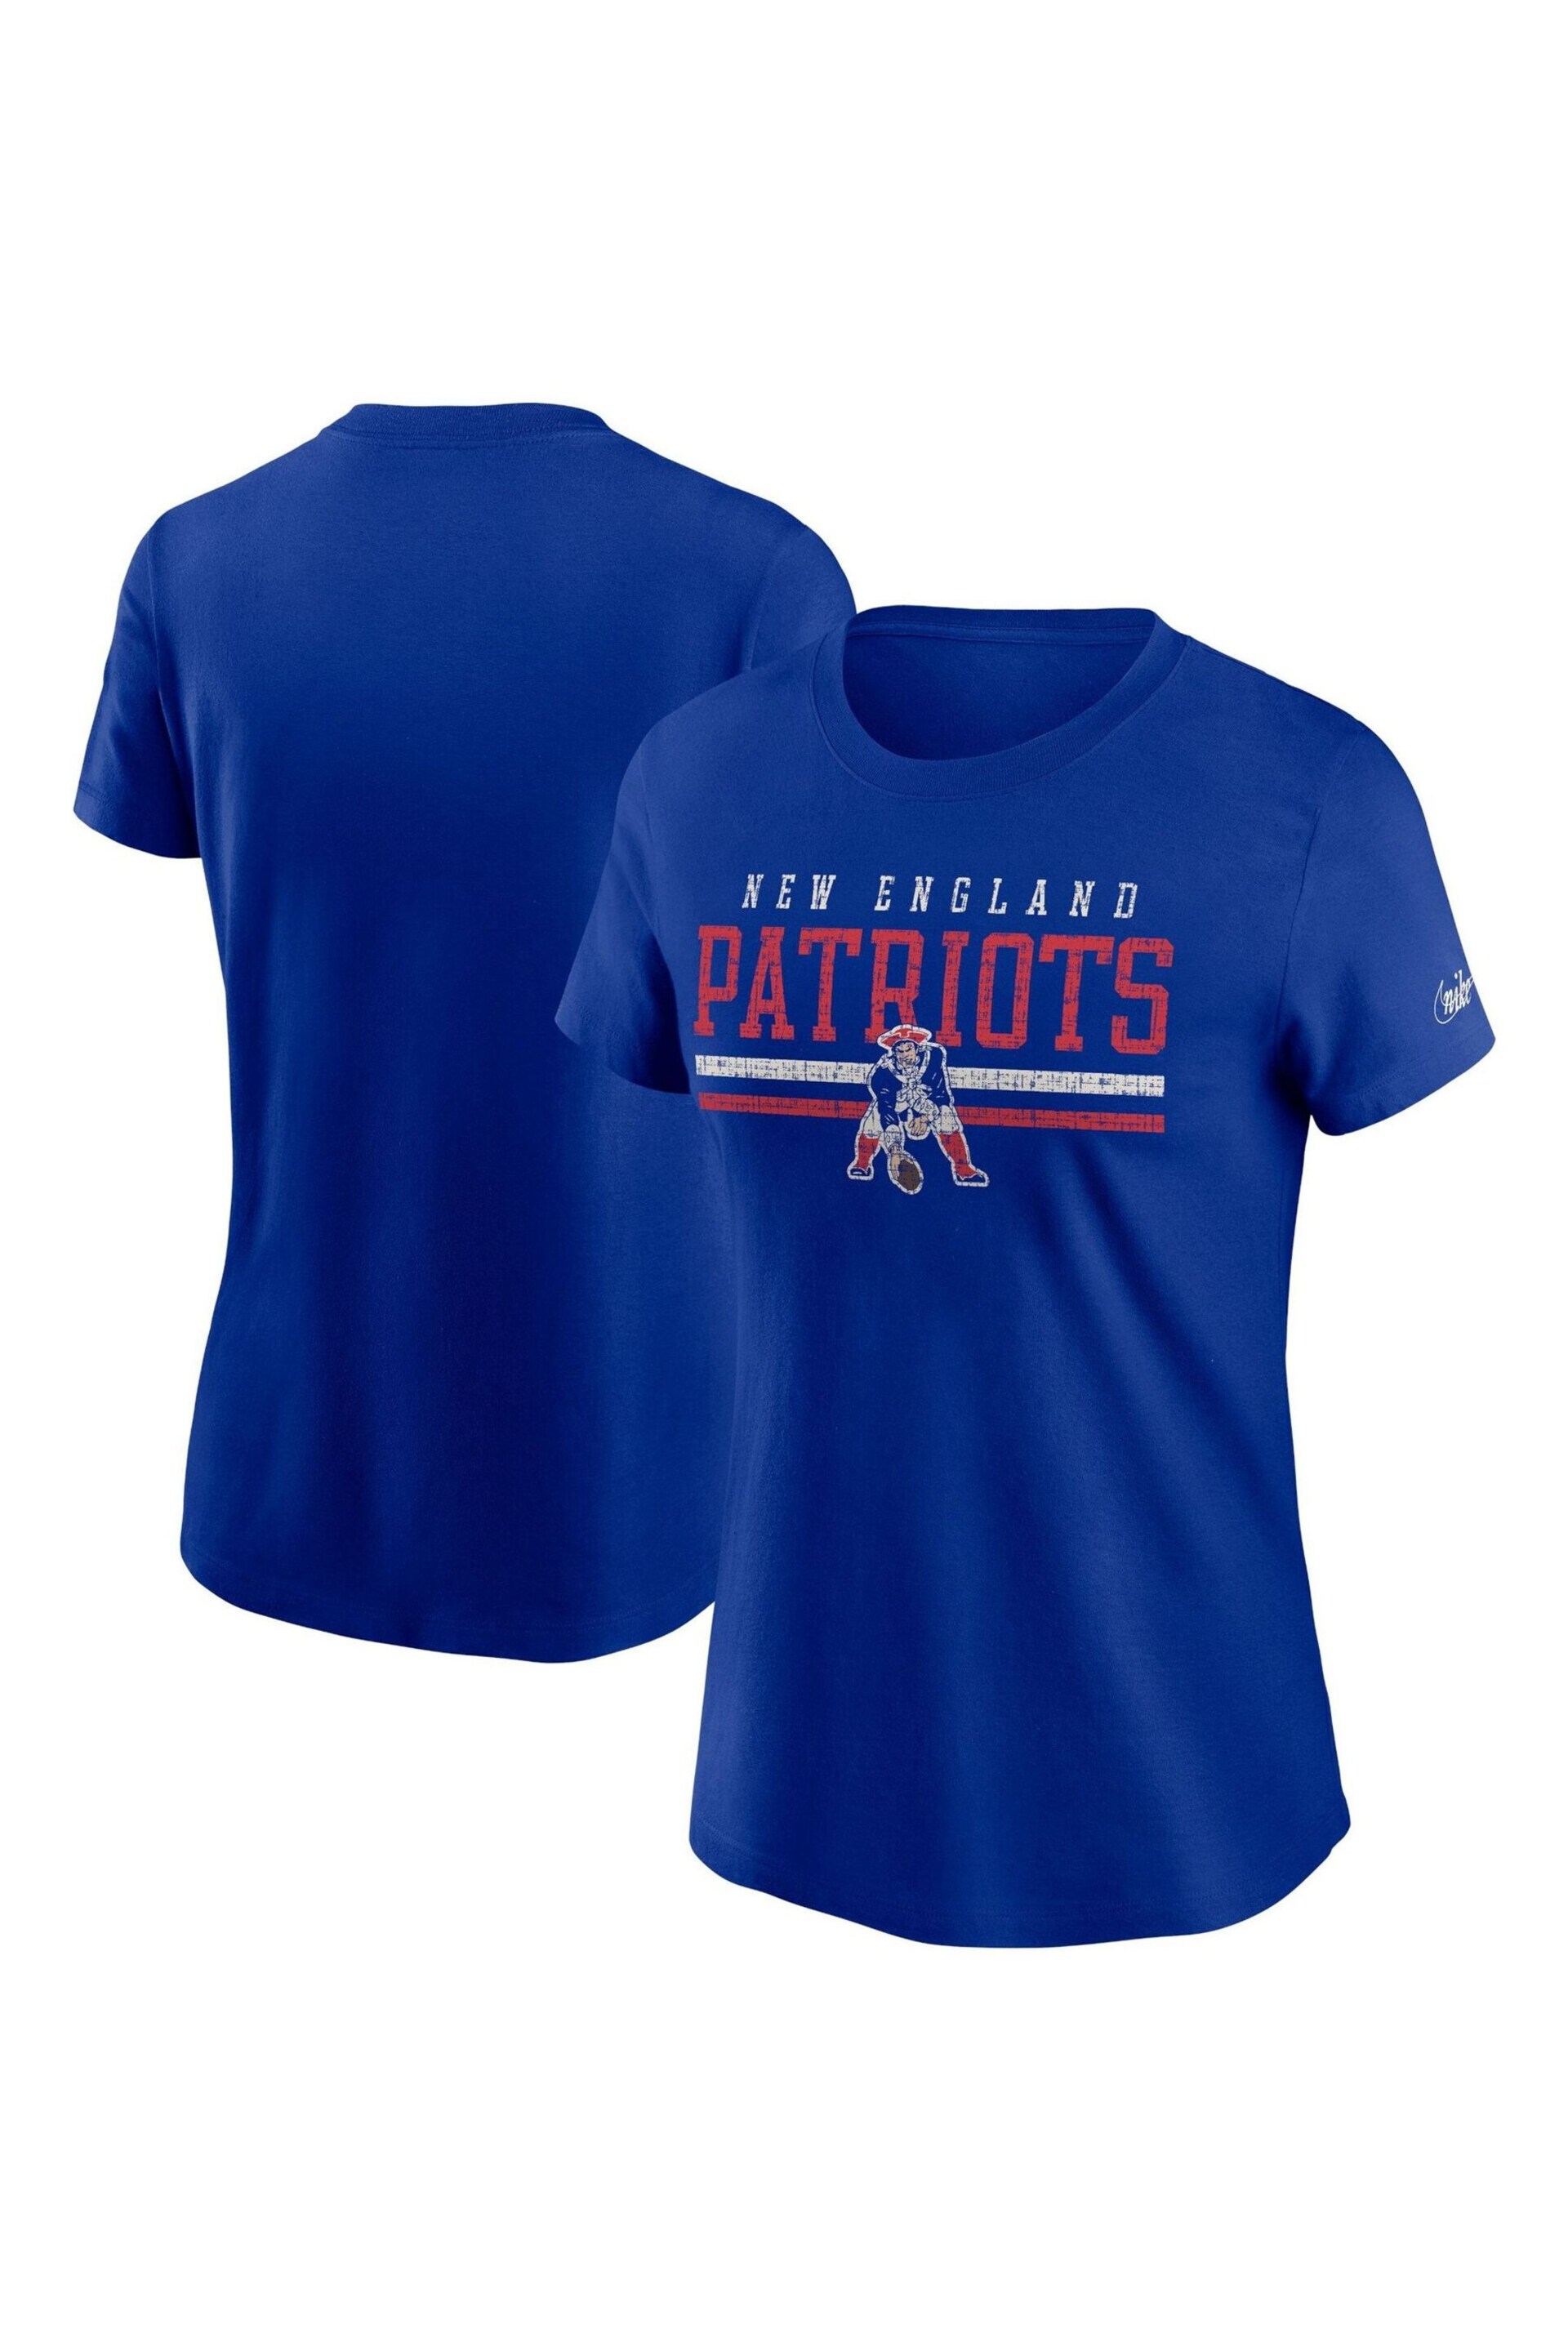 Nike Blue NFL Fanatics Womens New England Patriots Short Sleeve Historic T-Shirt Womens - Image 3 of 3